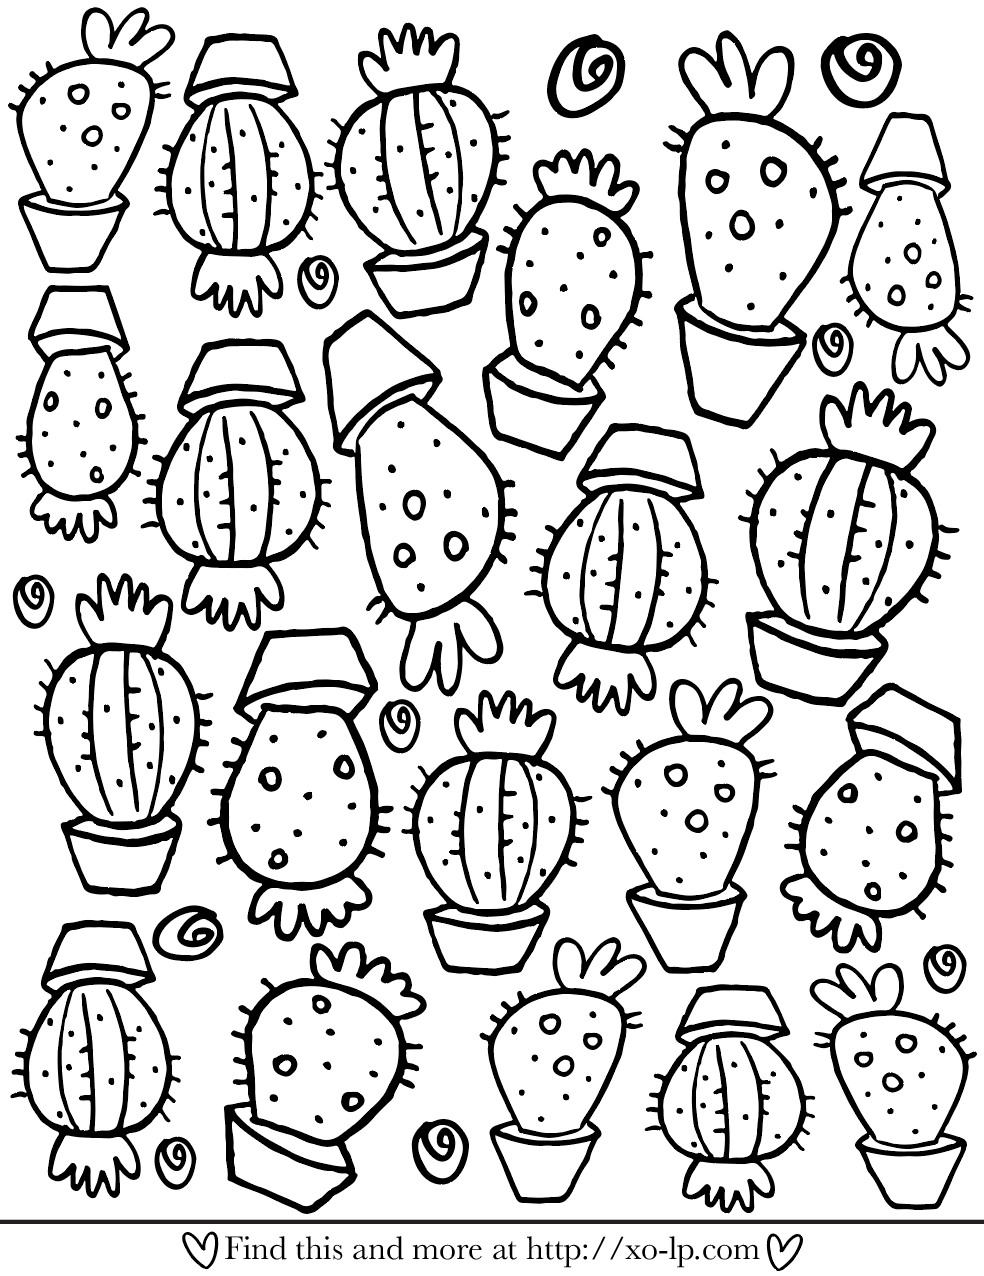 Cactus printable coloring page â xo